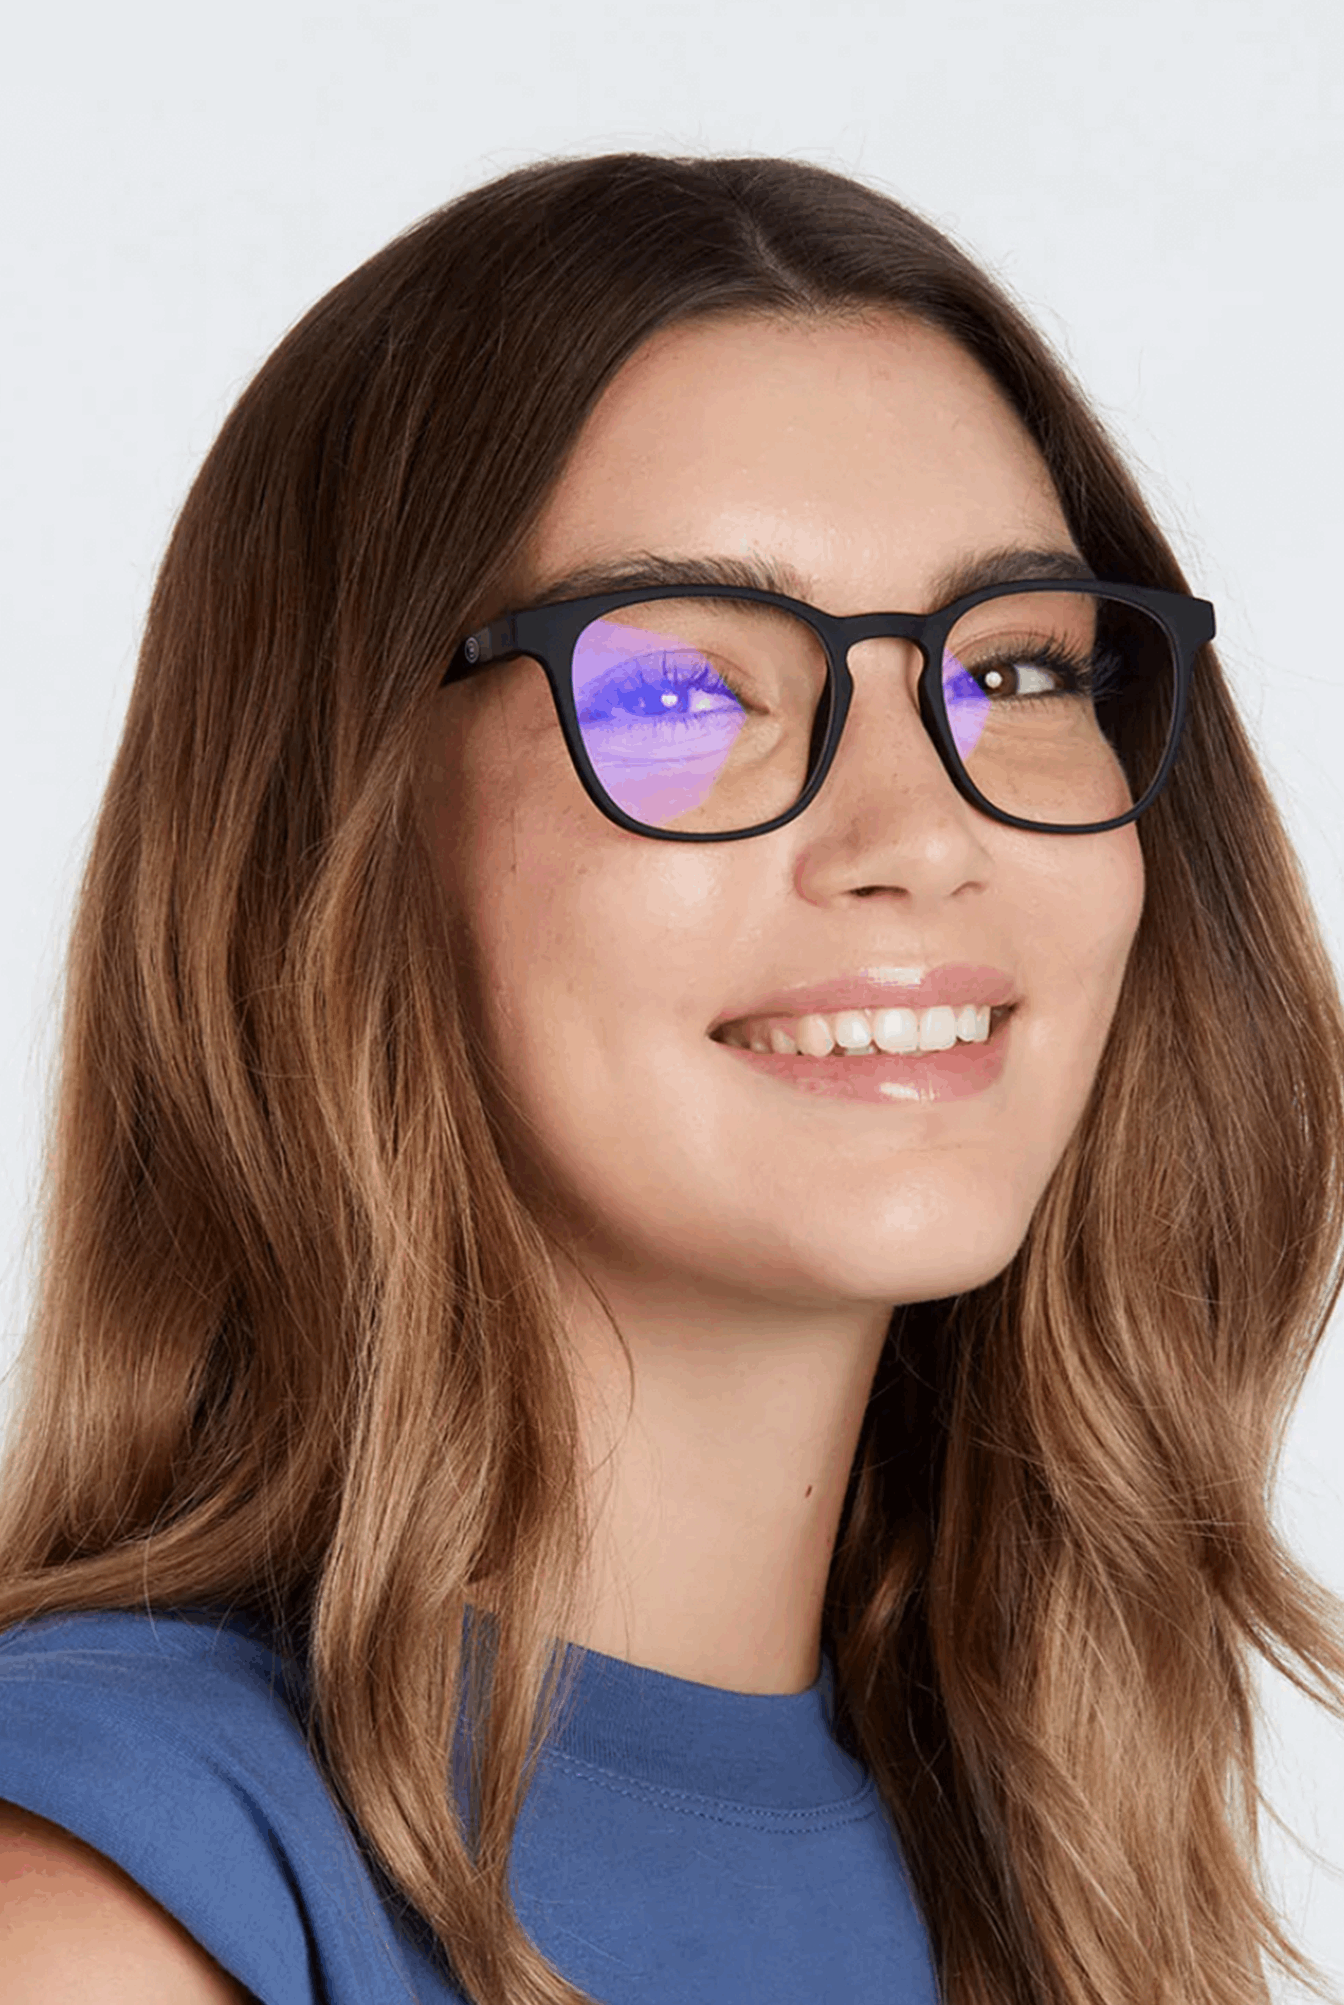 Barner - DALSTON - Neutral Glasses